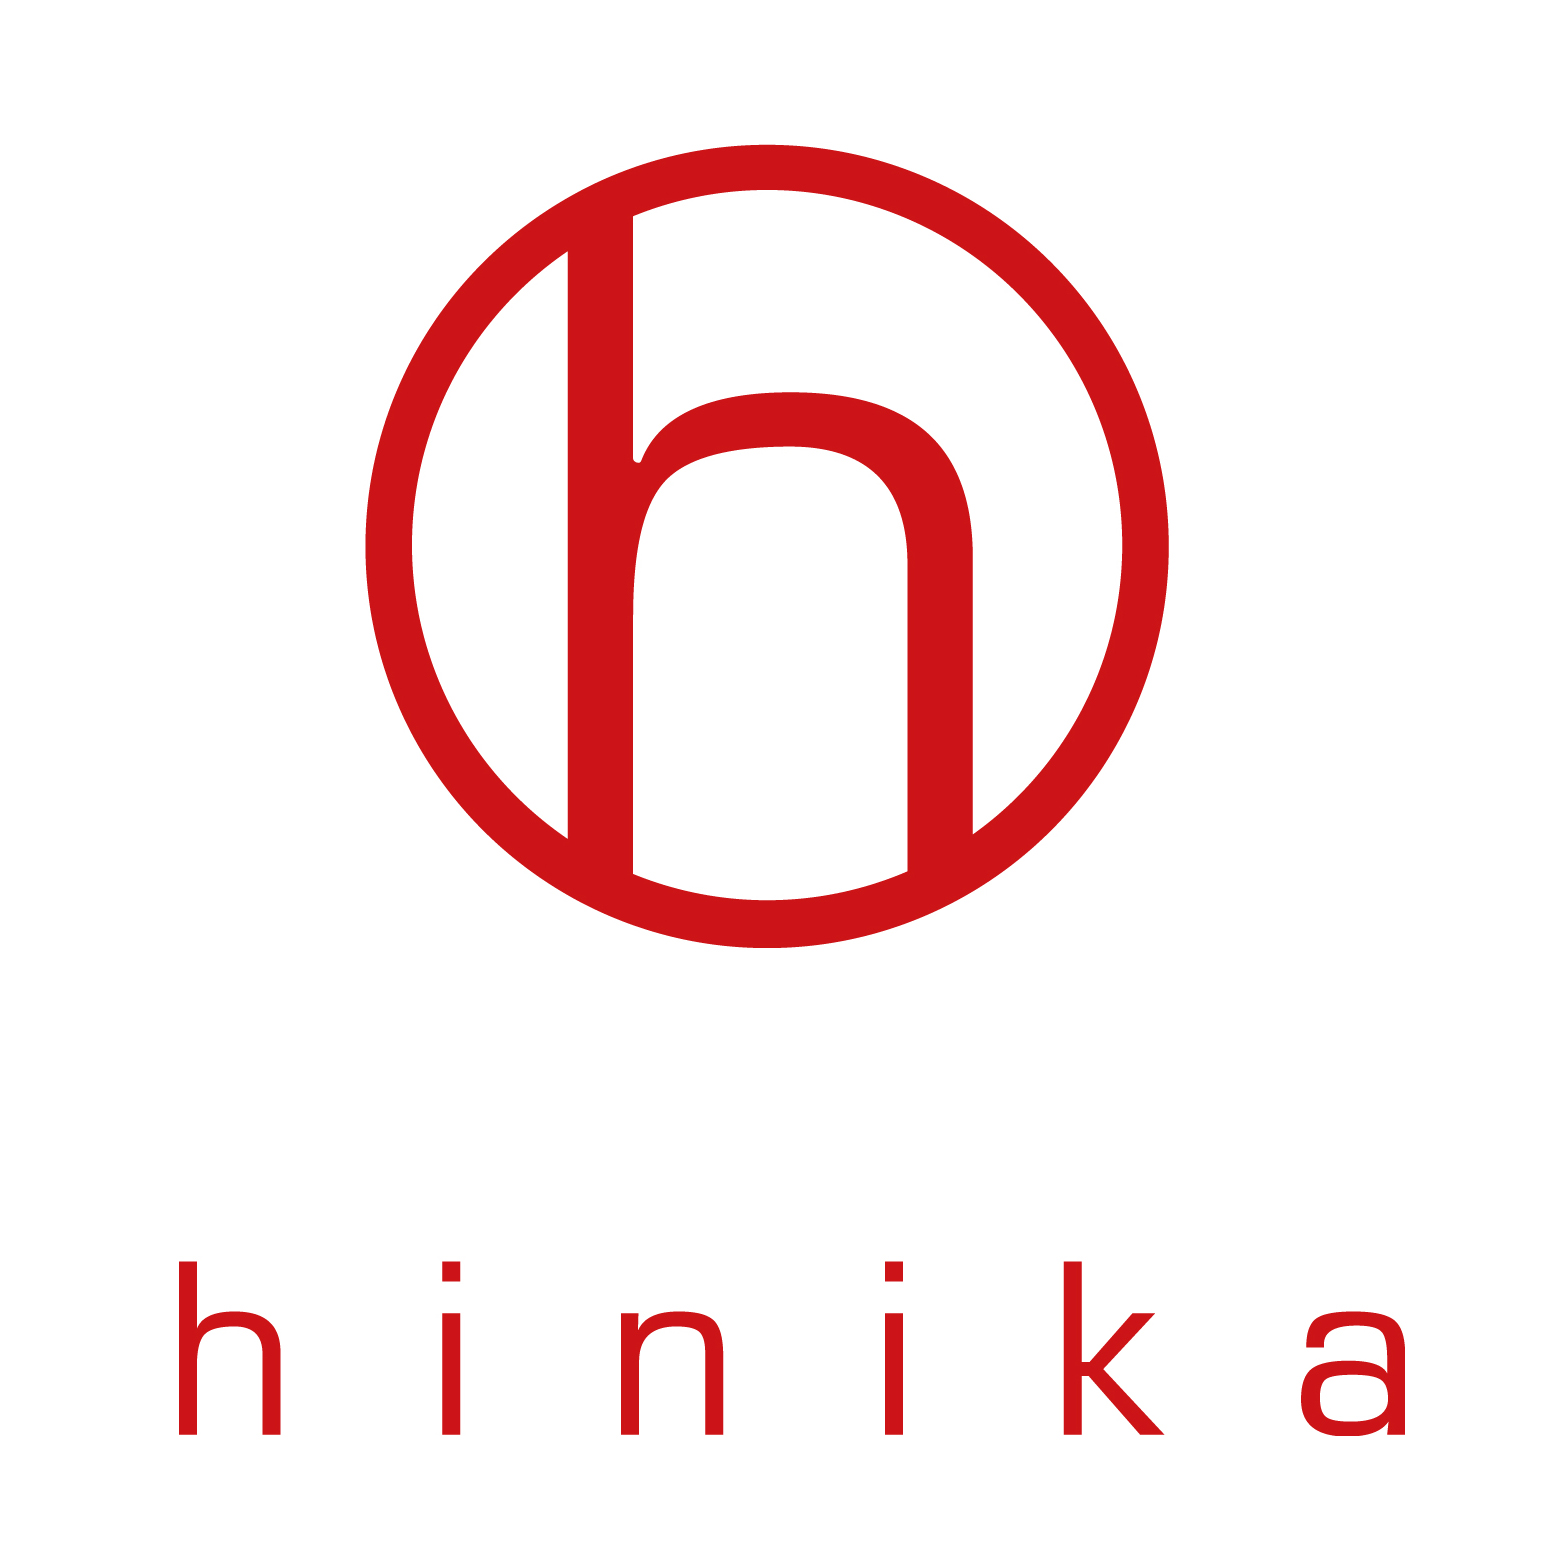 Hinika Logo and Word.jpg